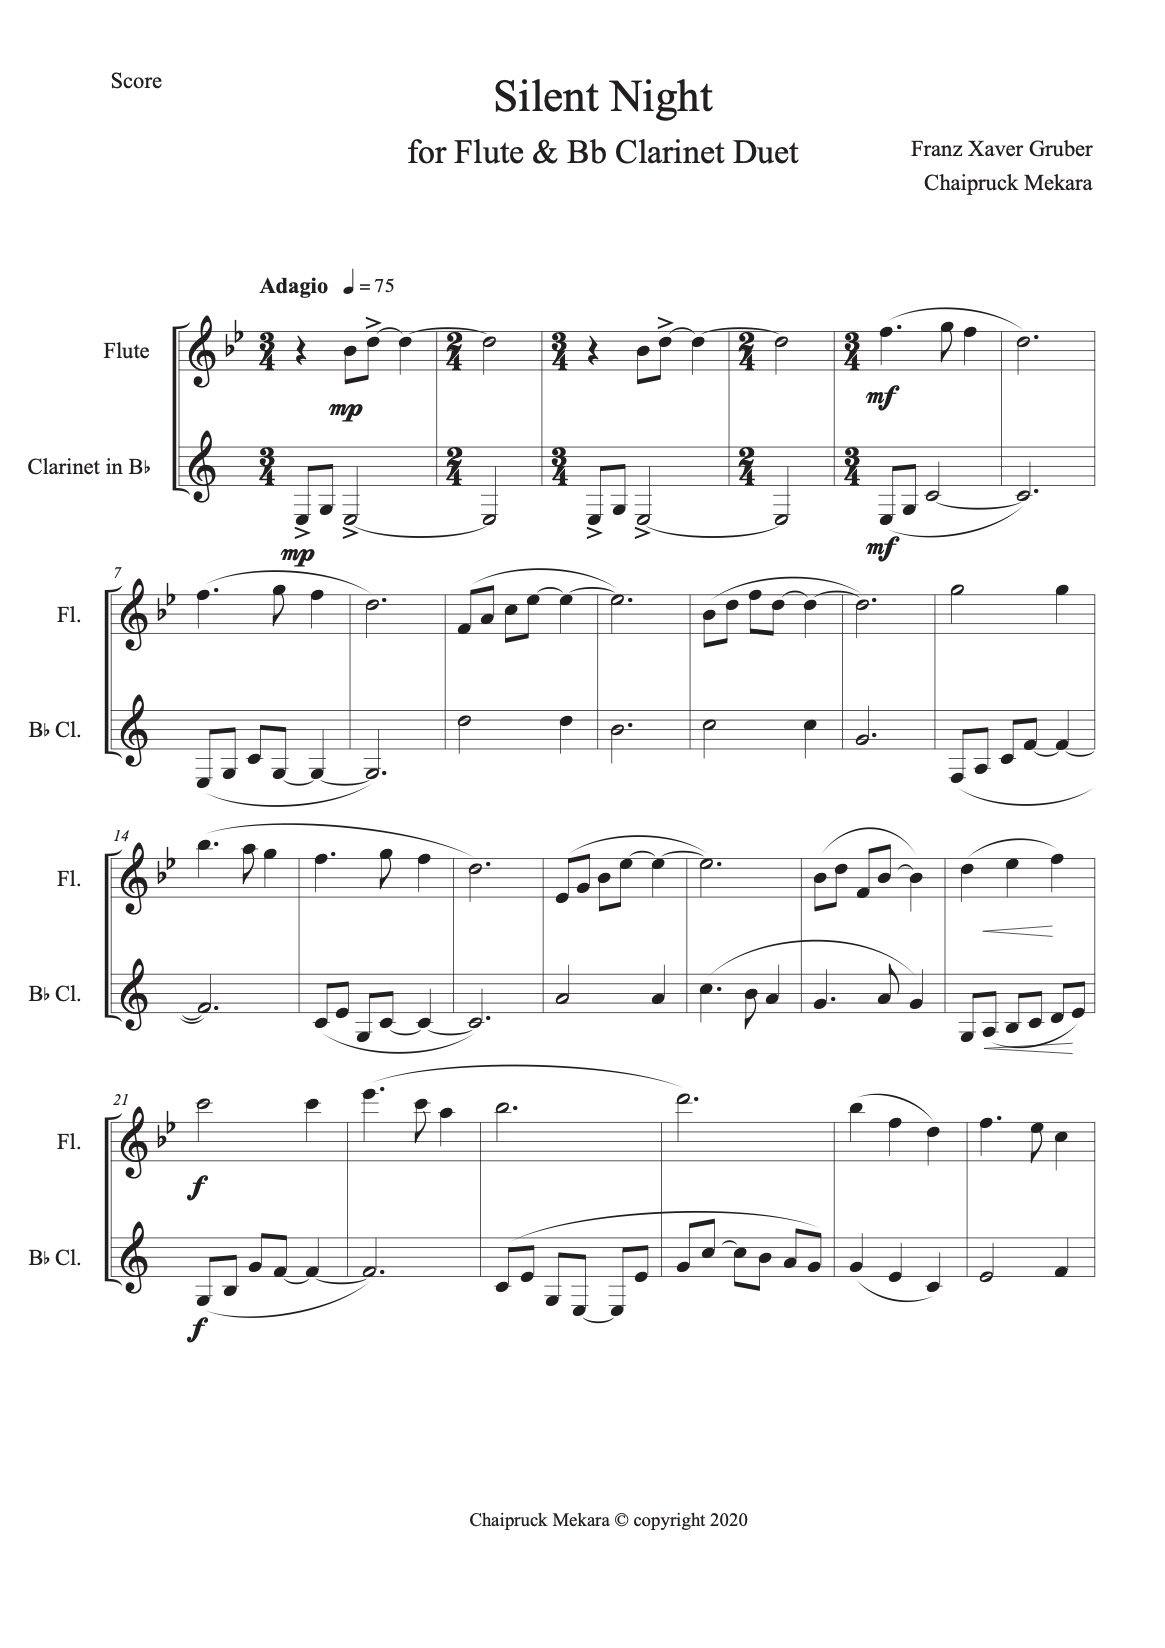 Silent Night for Flute and Bb Clarinet Duet (score+part) - ChaipruckMekara